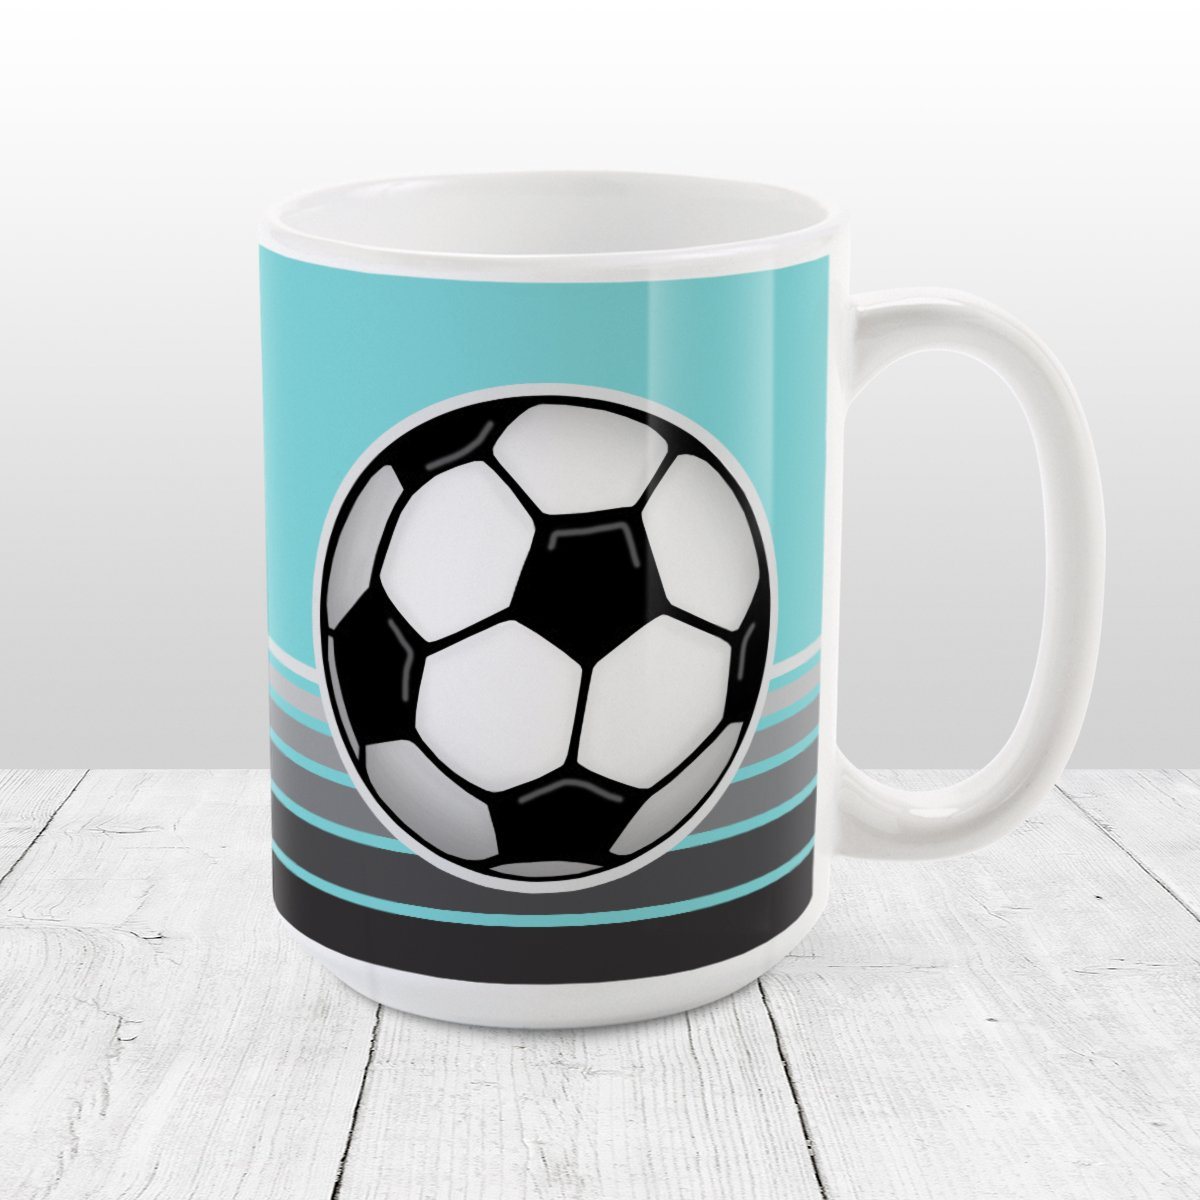 Gray Gradient Lined Teal Soccer Ball Mug at Amy's Coffee Mugs